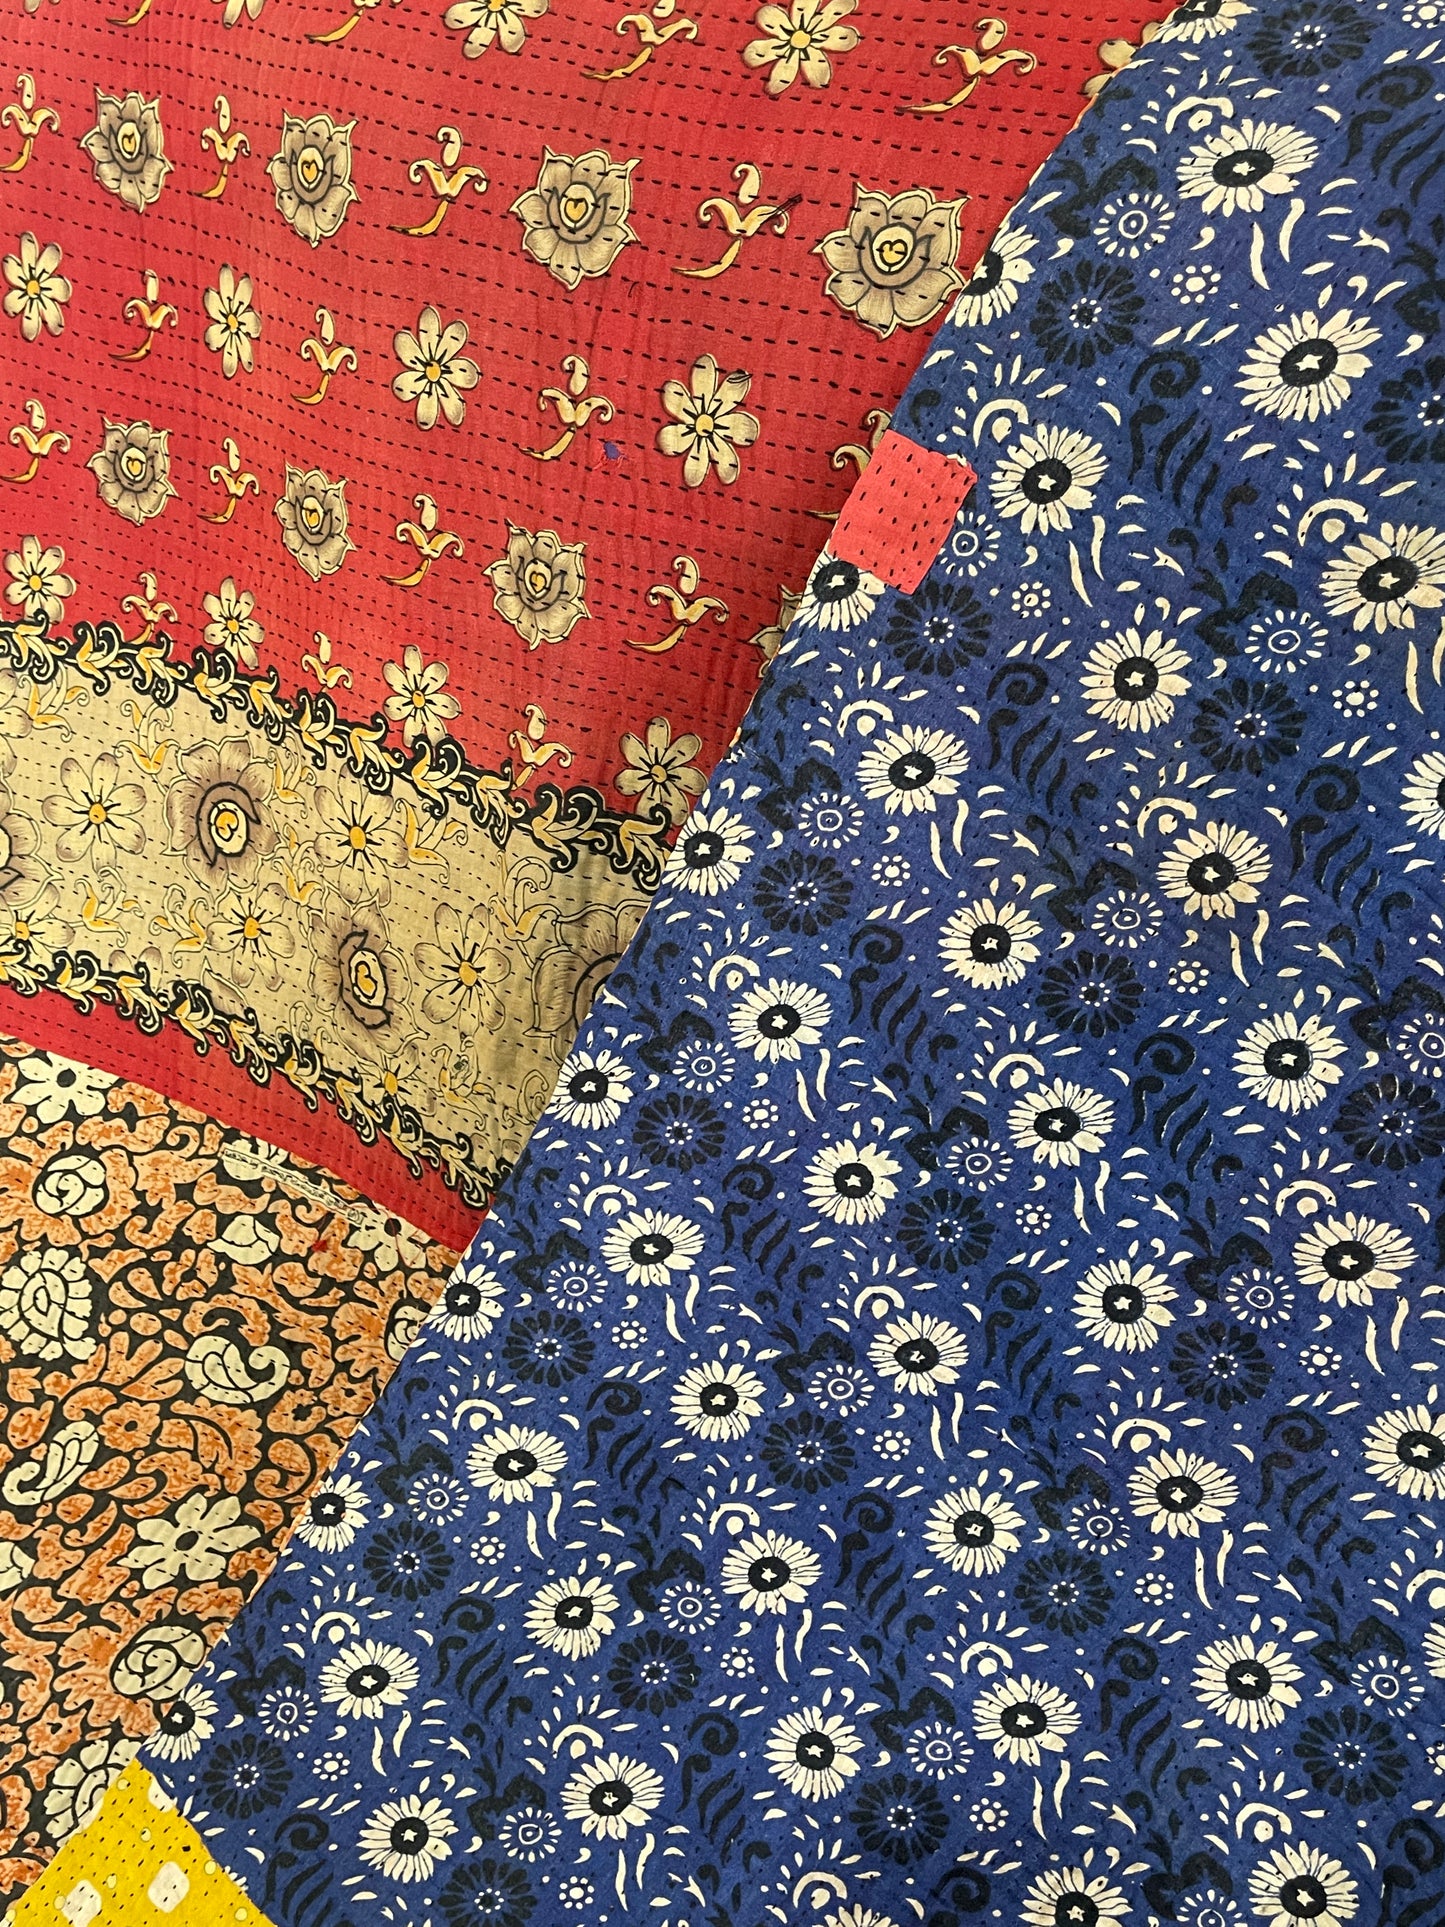 Indian Handmade Reversible Vintage Kantha Quilt Bedspread Mary